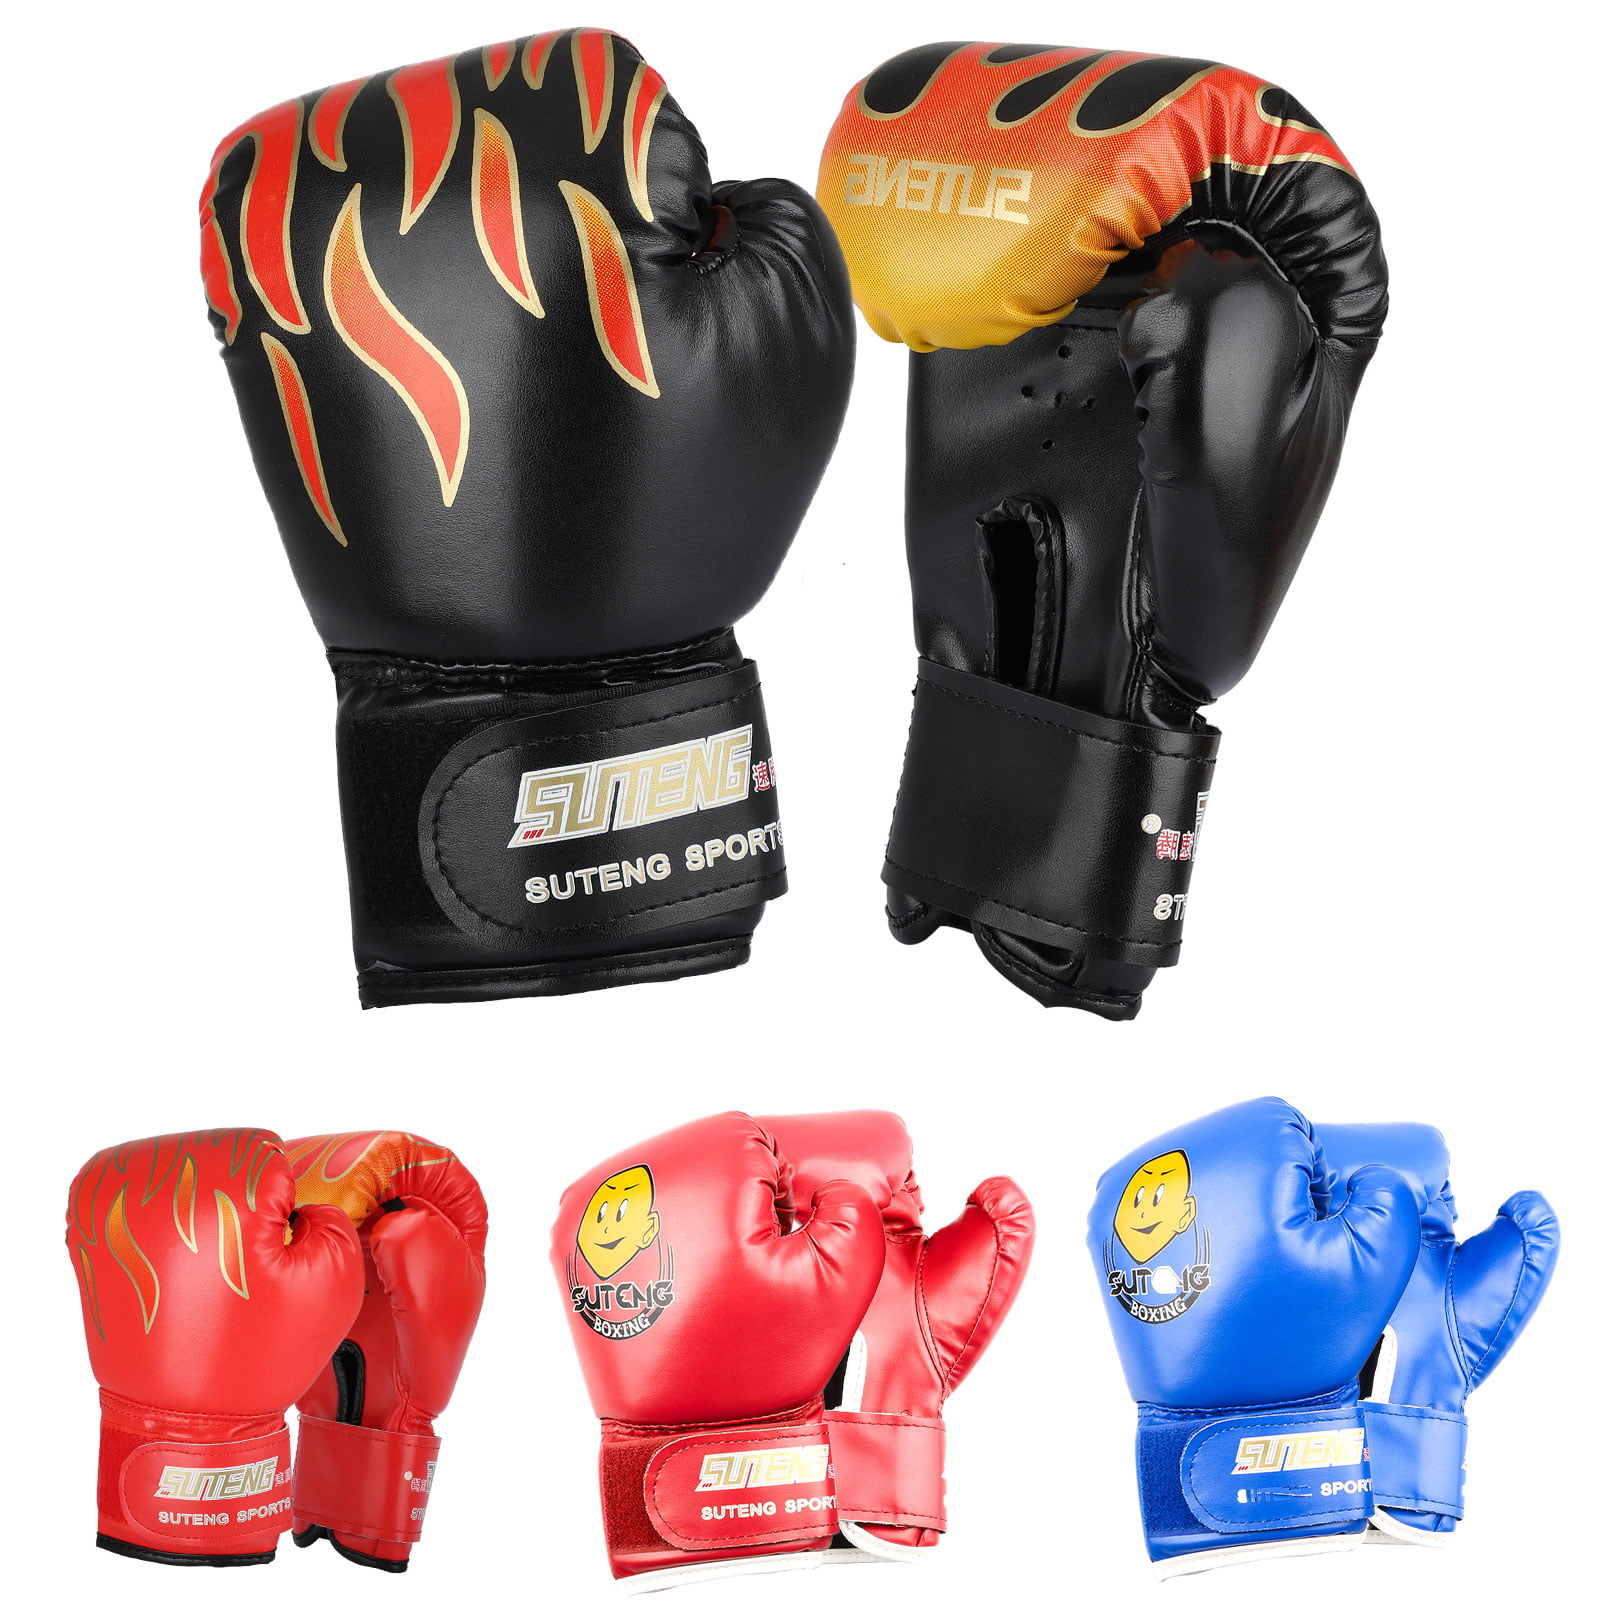 5 OZ Boxing Gloves For Kids Children Training Punching Bag Kickboxing Mitts US 